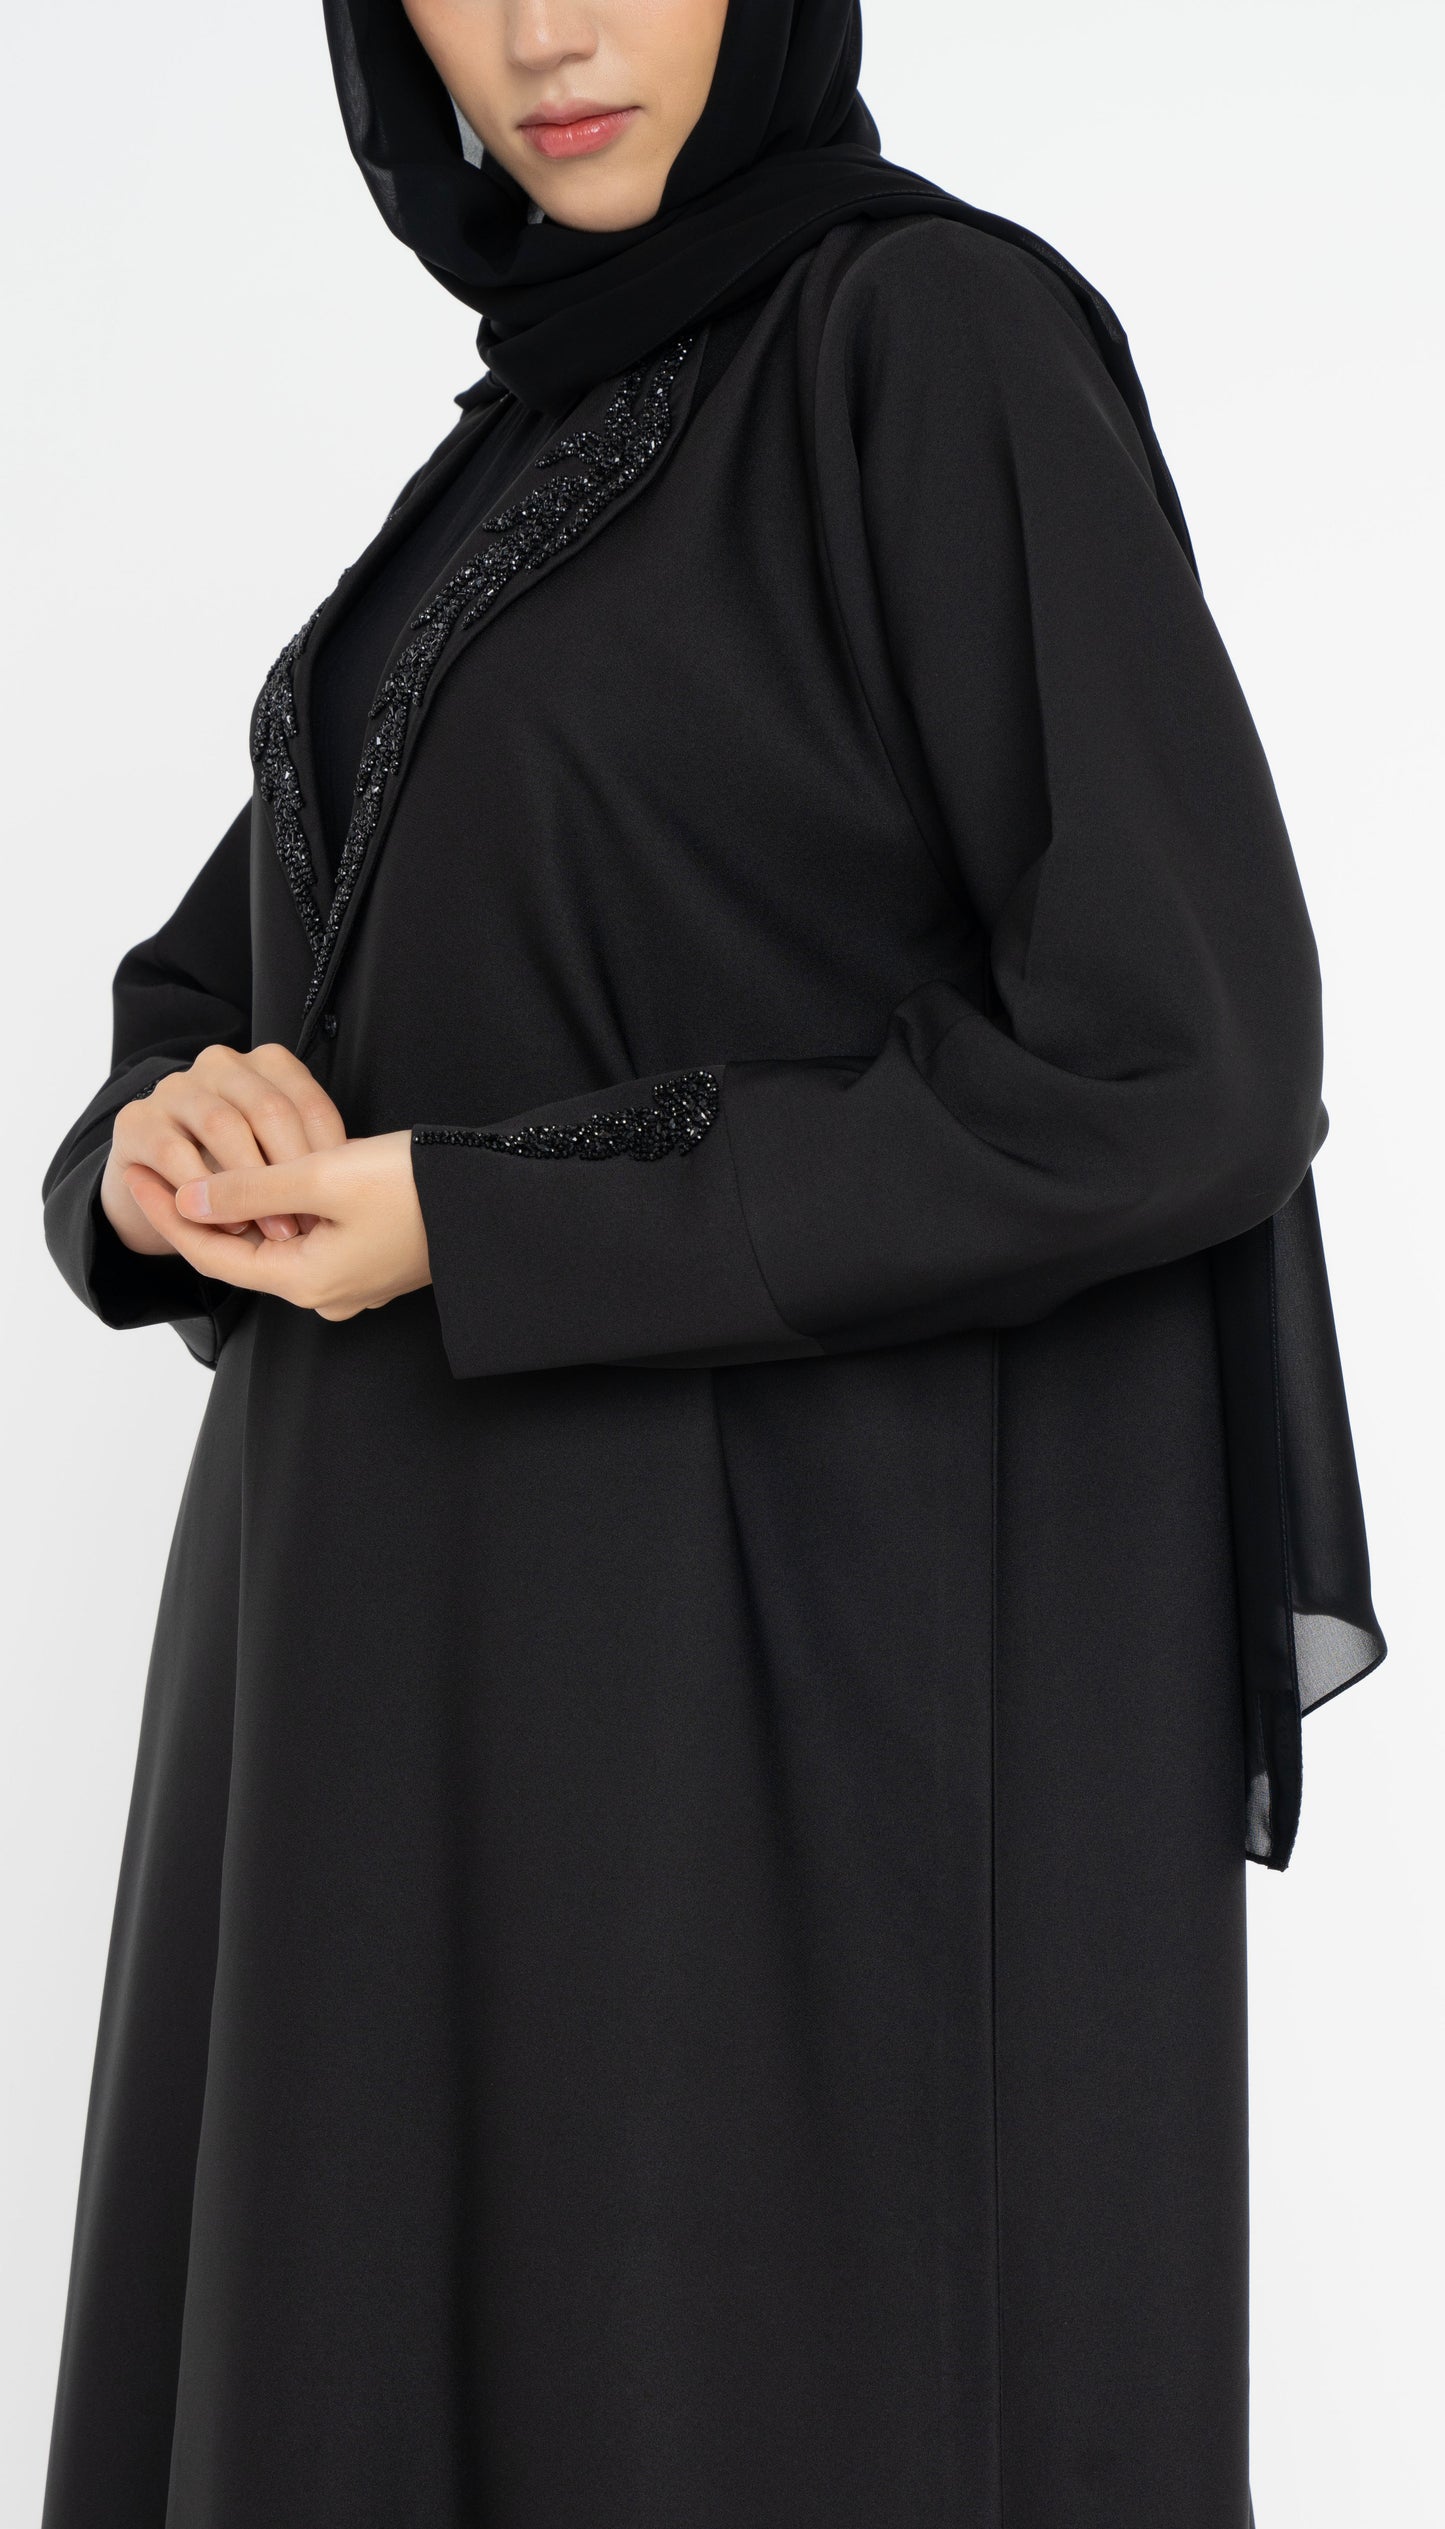 Collar Abaya With Handwork Detailing On Sleeves And Collar